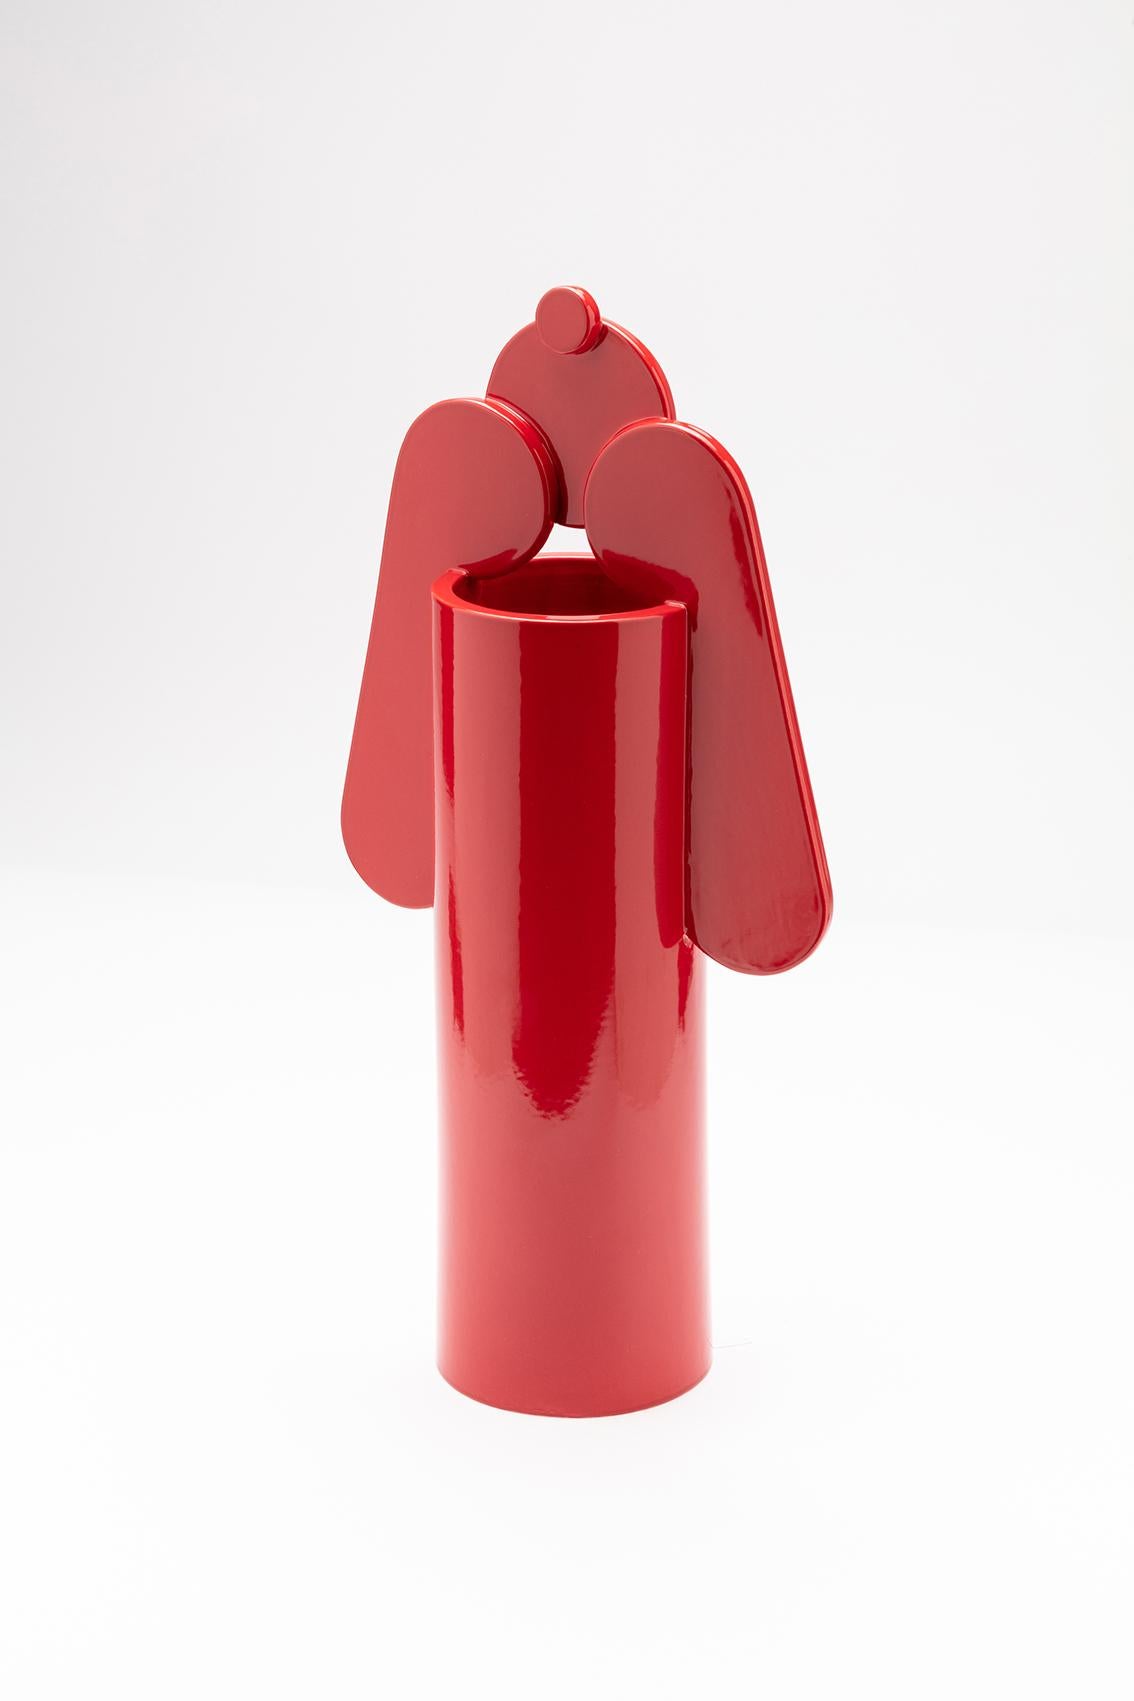 Modern Contemporary Ceramic Set Duo Vases Red Glossy glazed CUORECARPENITO ME∞TE For Sale